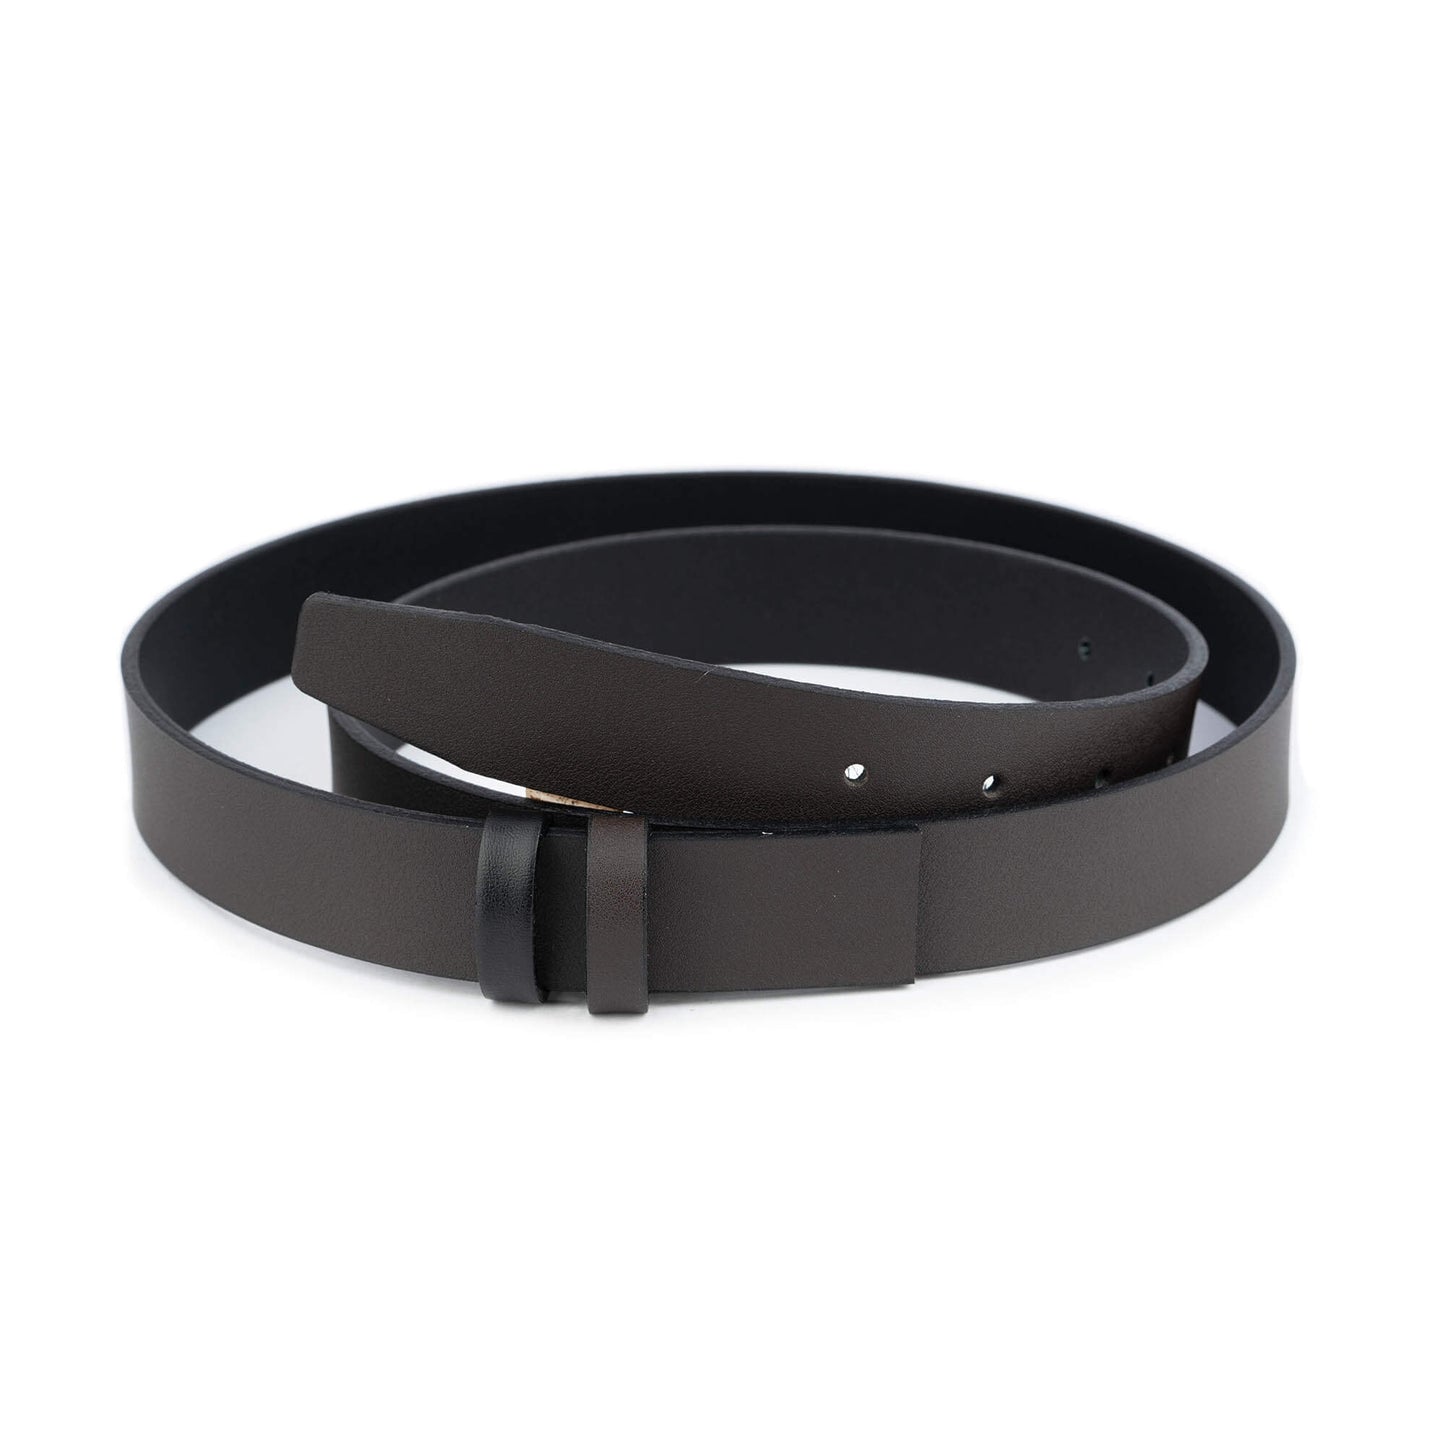 3.0 cm Black Brown Reversible Leather Belt Strap For Ferragamo Buckles Replacement